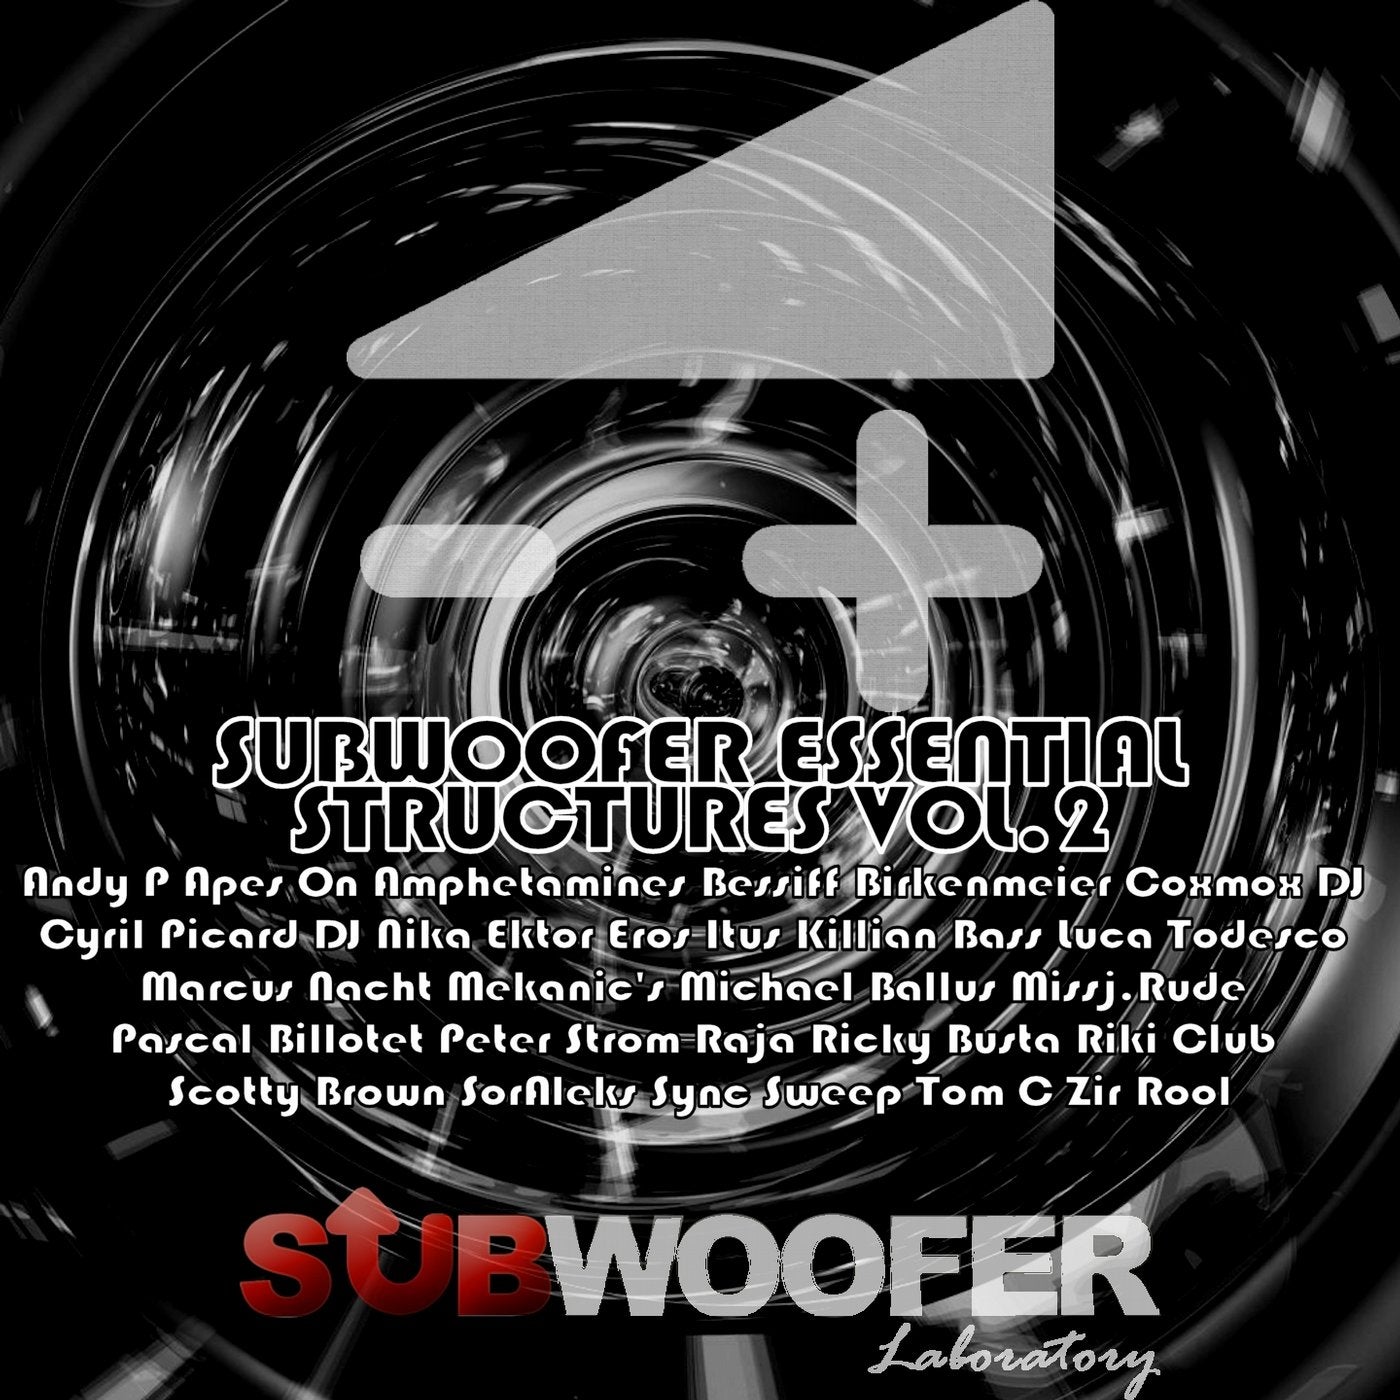 Subwoofer Essential Structures, Vol. 2